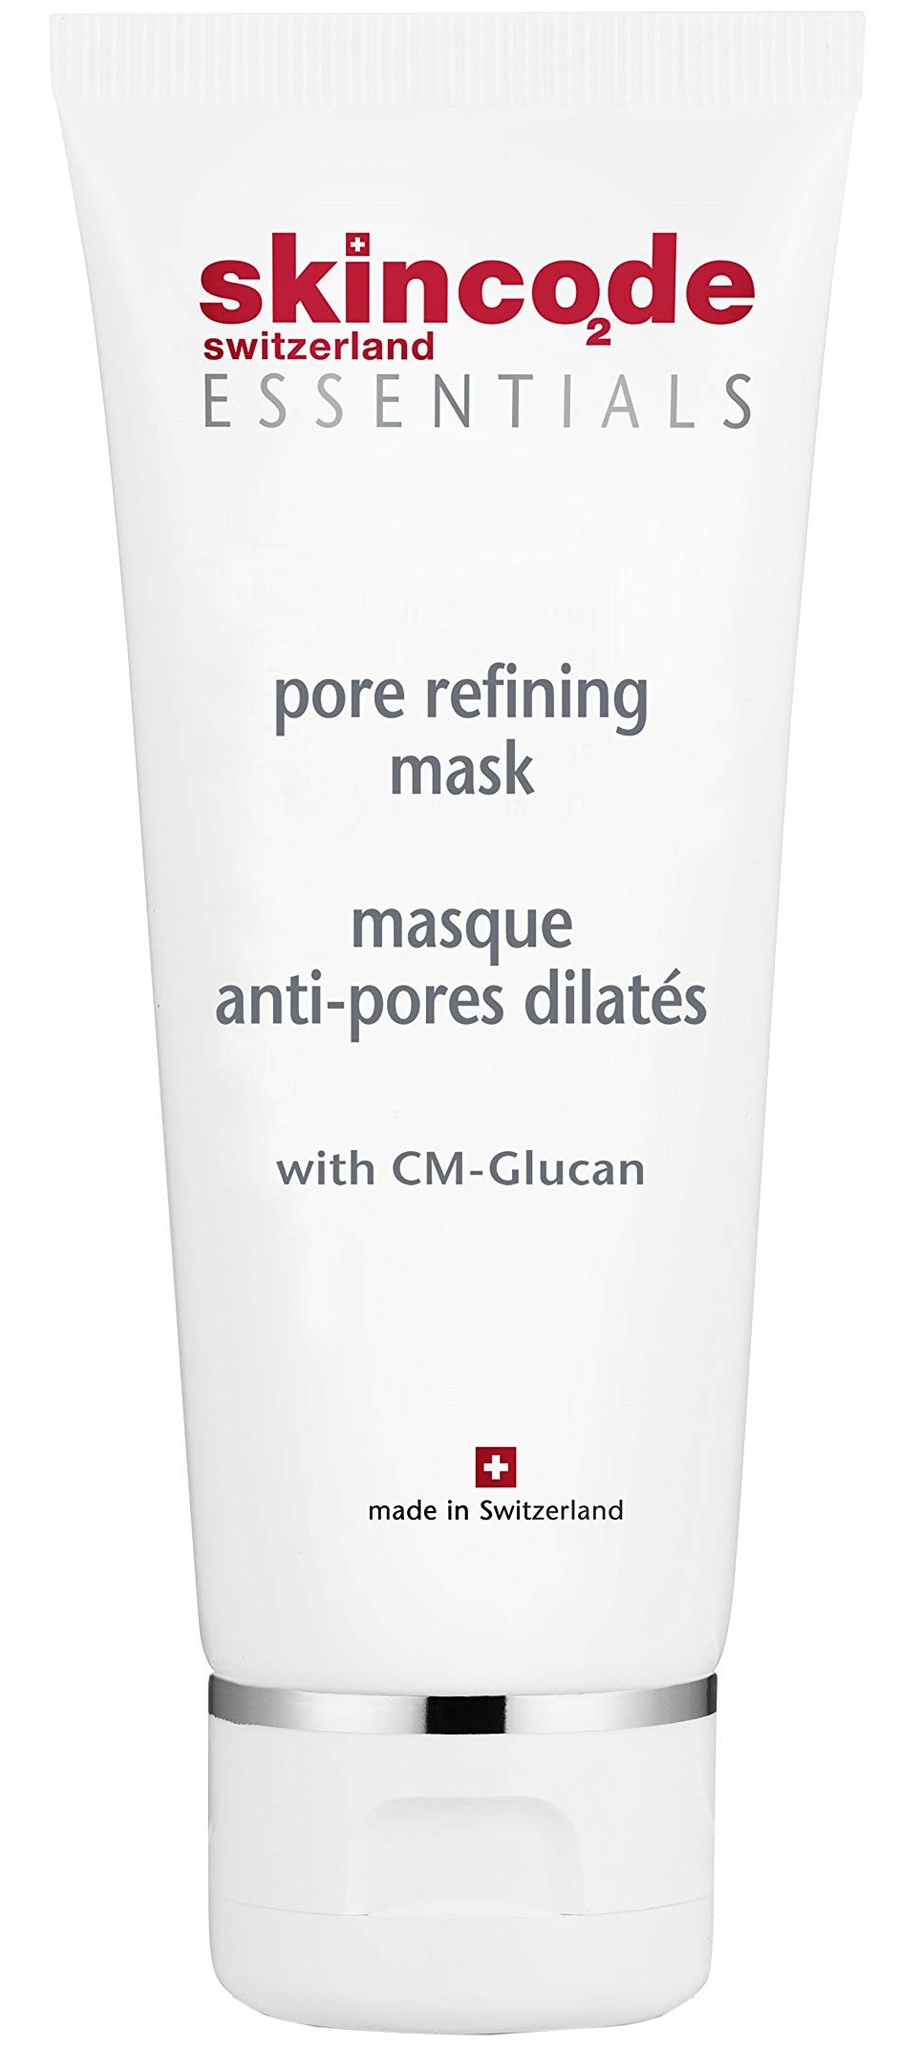 Skincode Essentials Pore Refining Mask